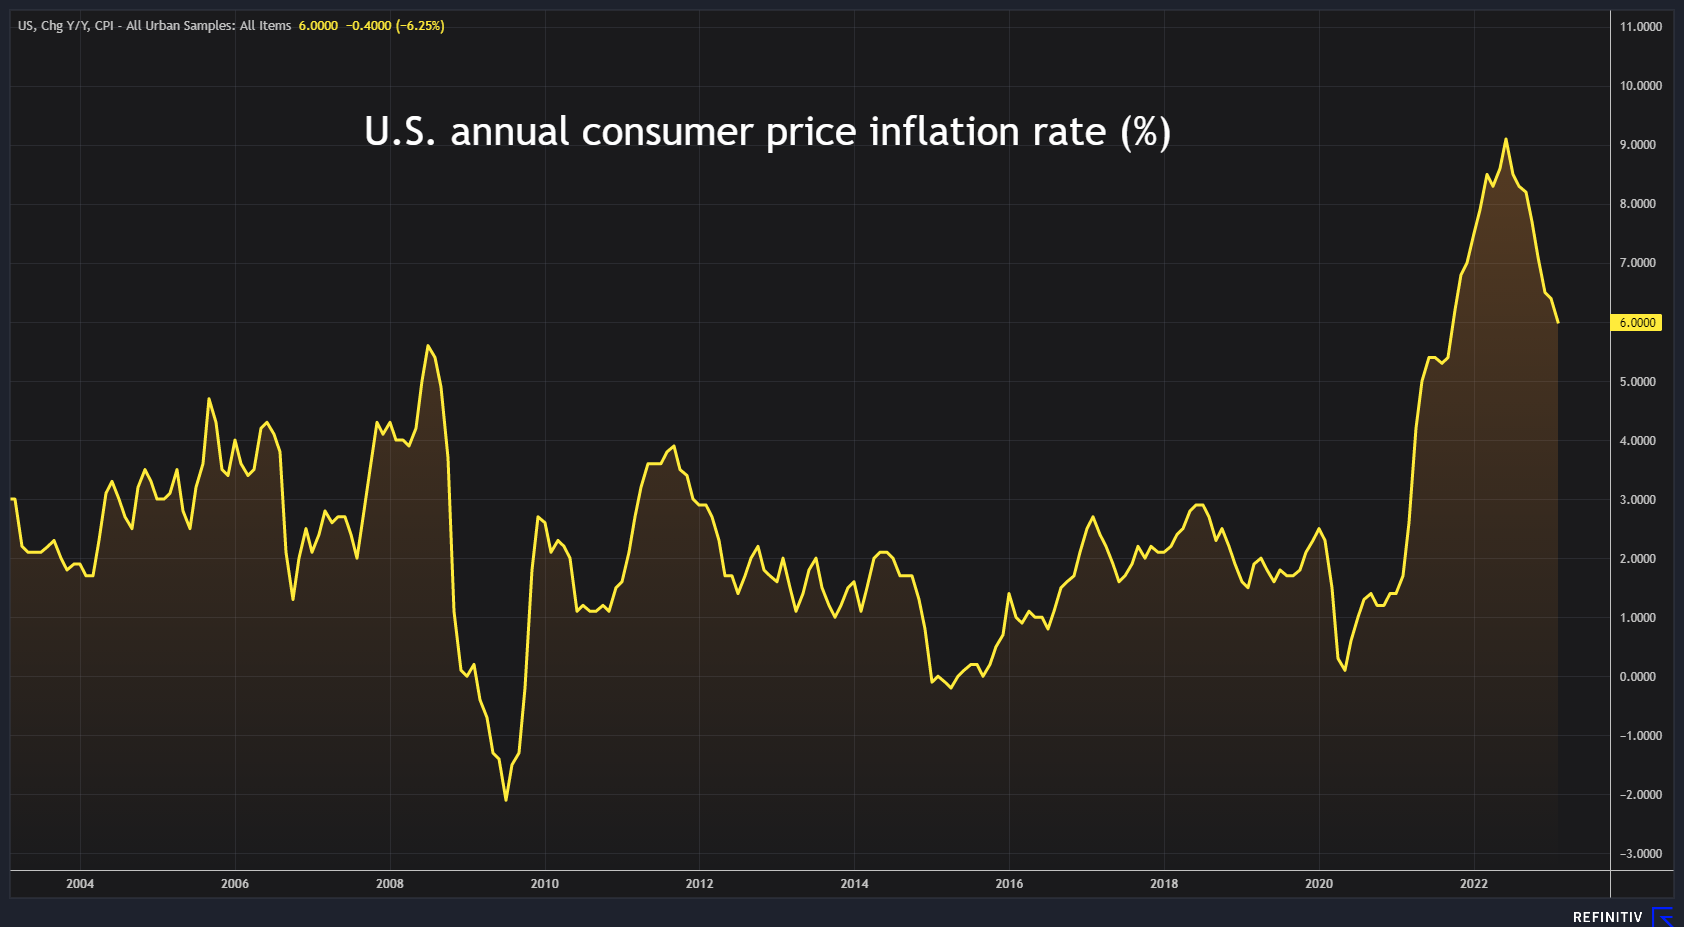 U.S. CPI inflation